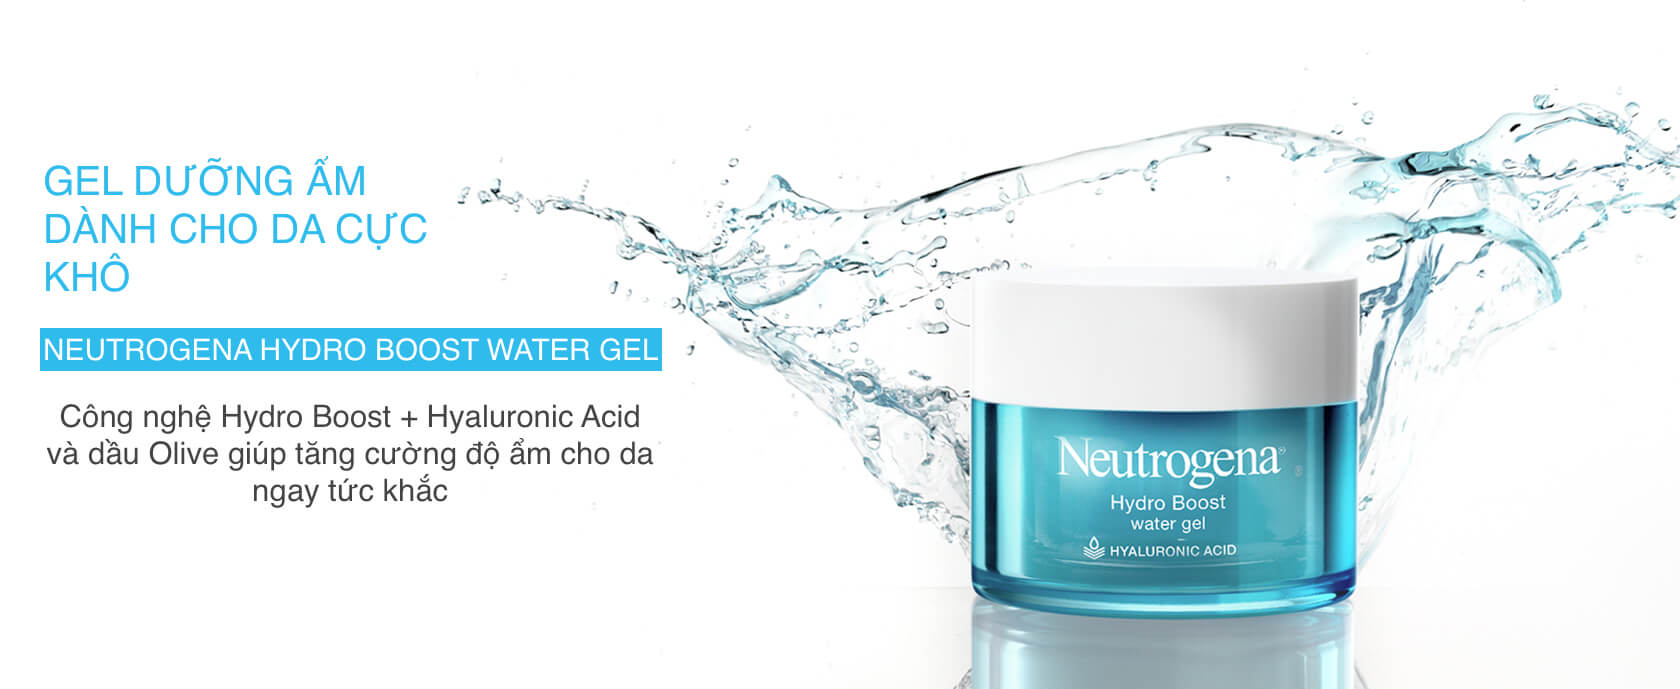 Neutrogena Hydro Boost Gel-Cream 50ml